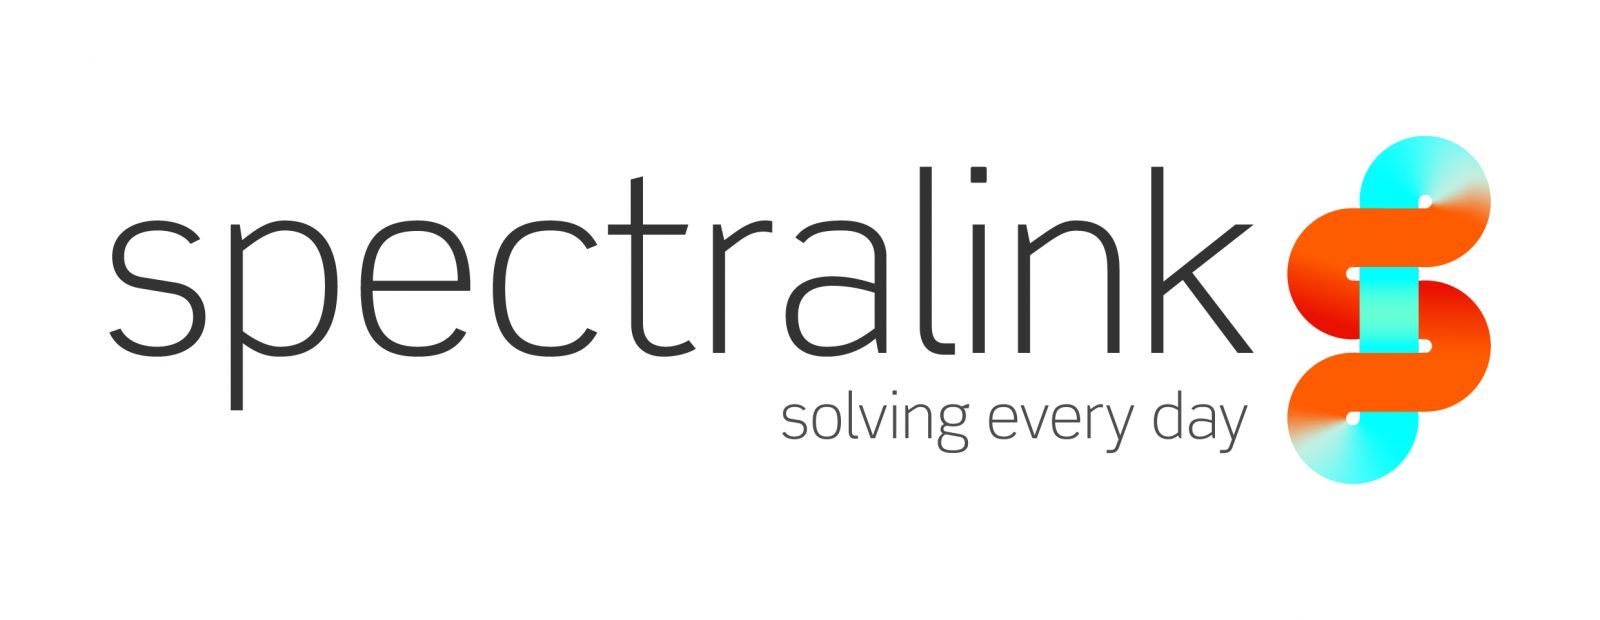 spectralink-logo